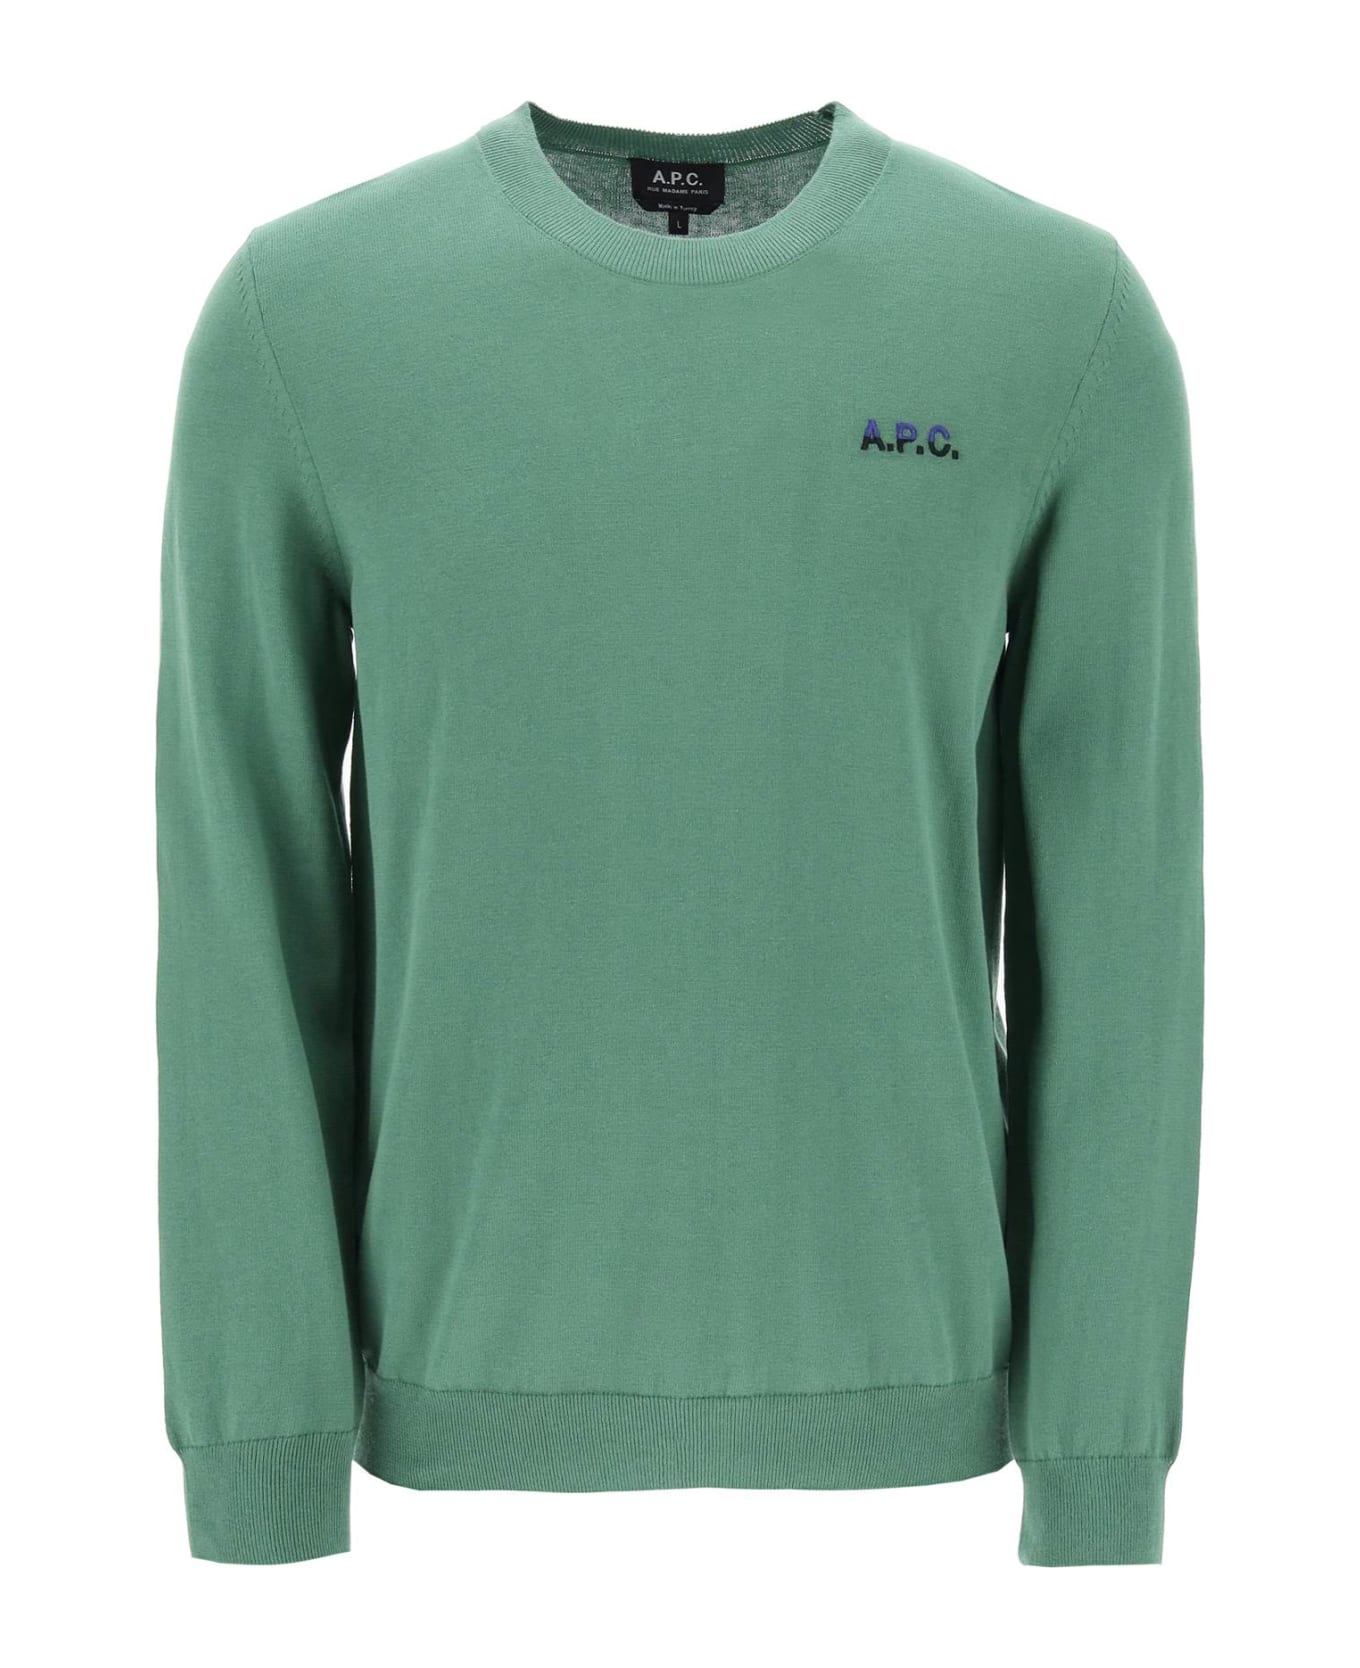 A.P.C. Cotton Crewneck Sweater - Tki Vert Marine name:475